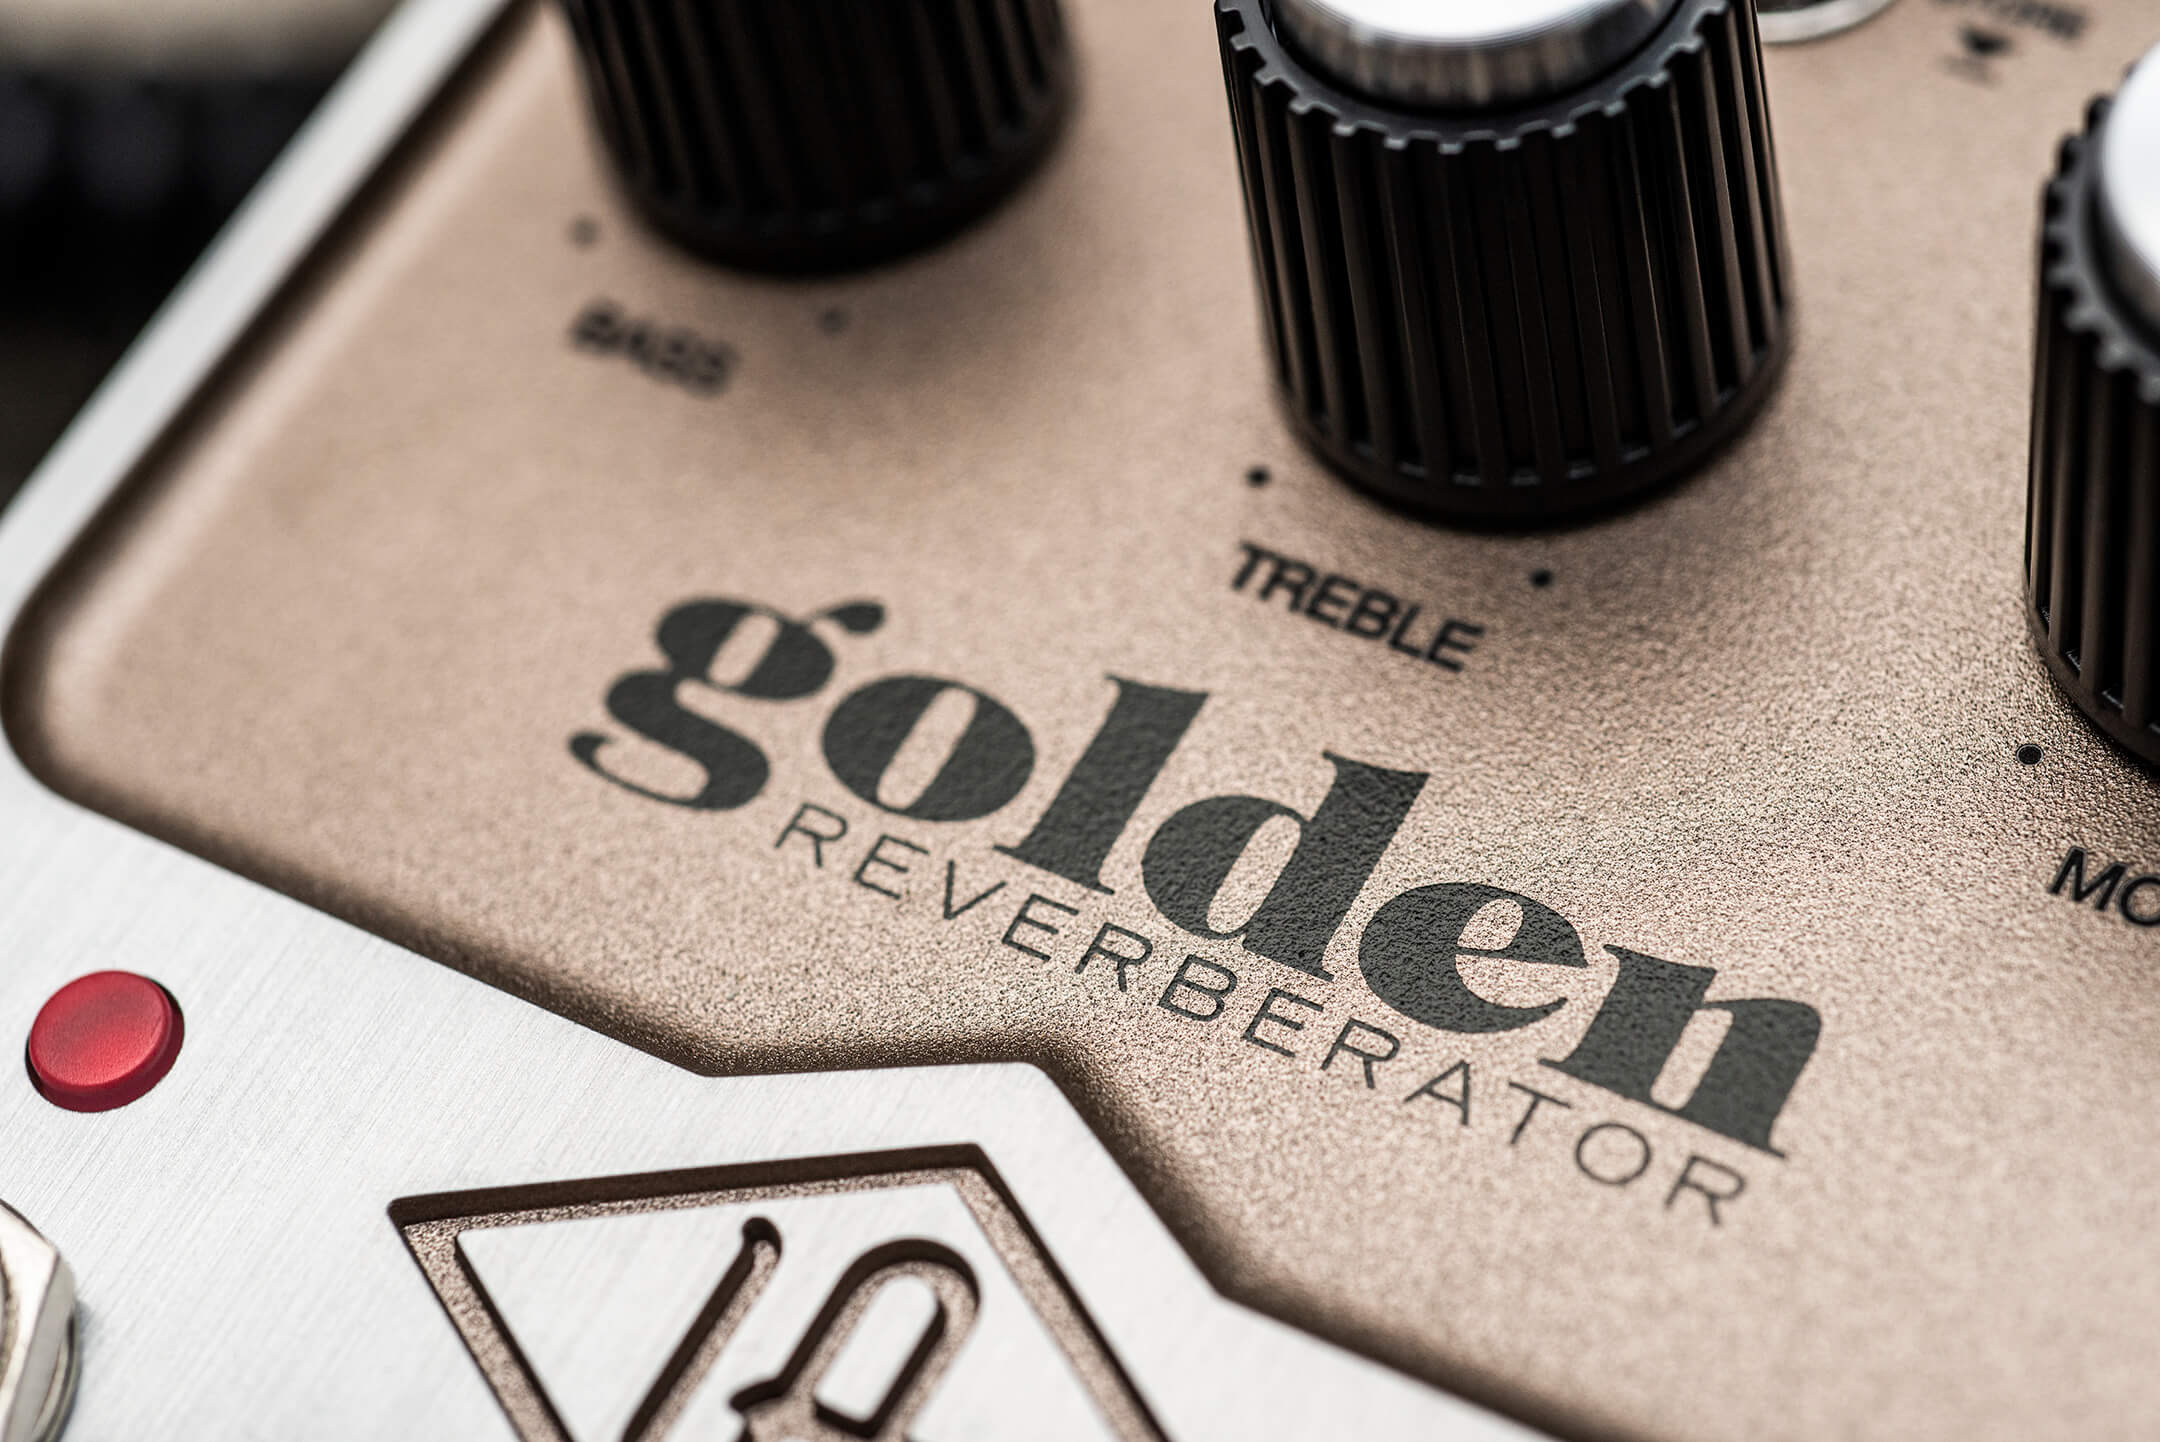 Universal Audio Golden Reverberator